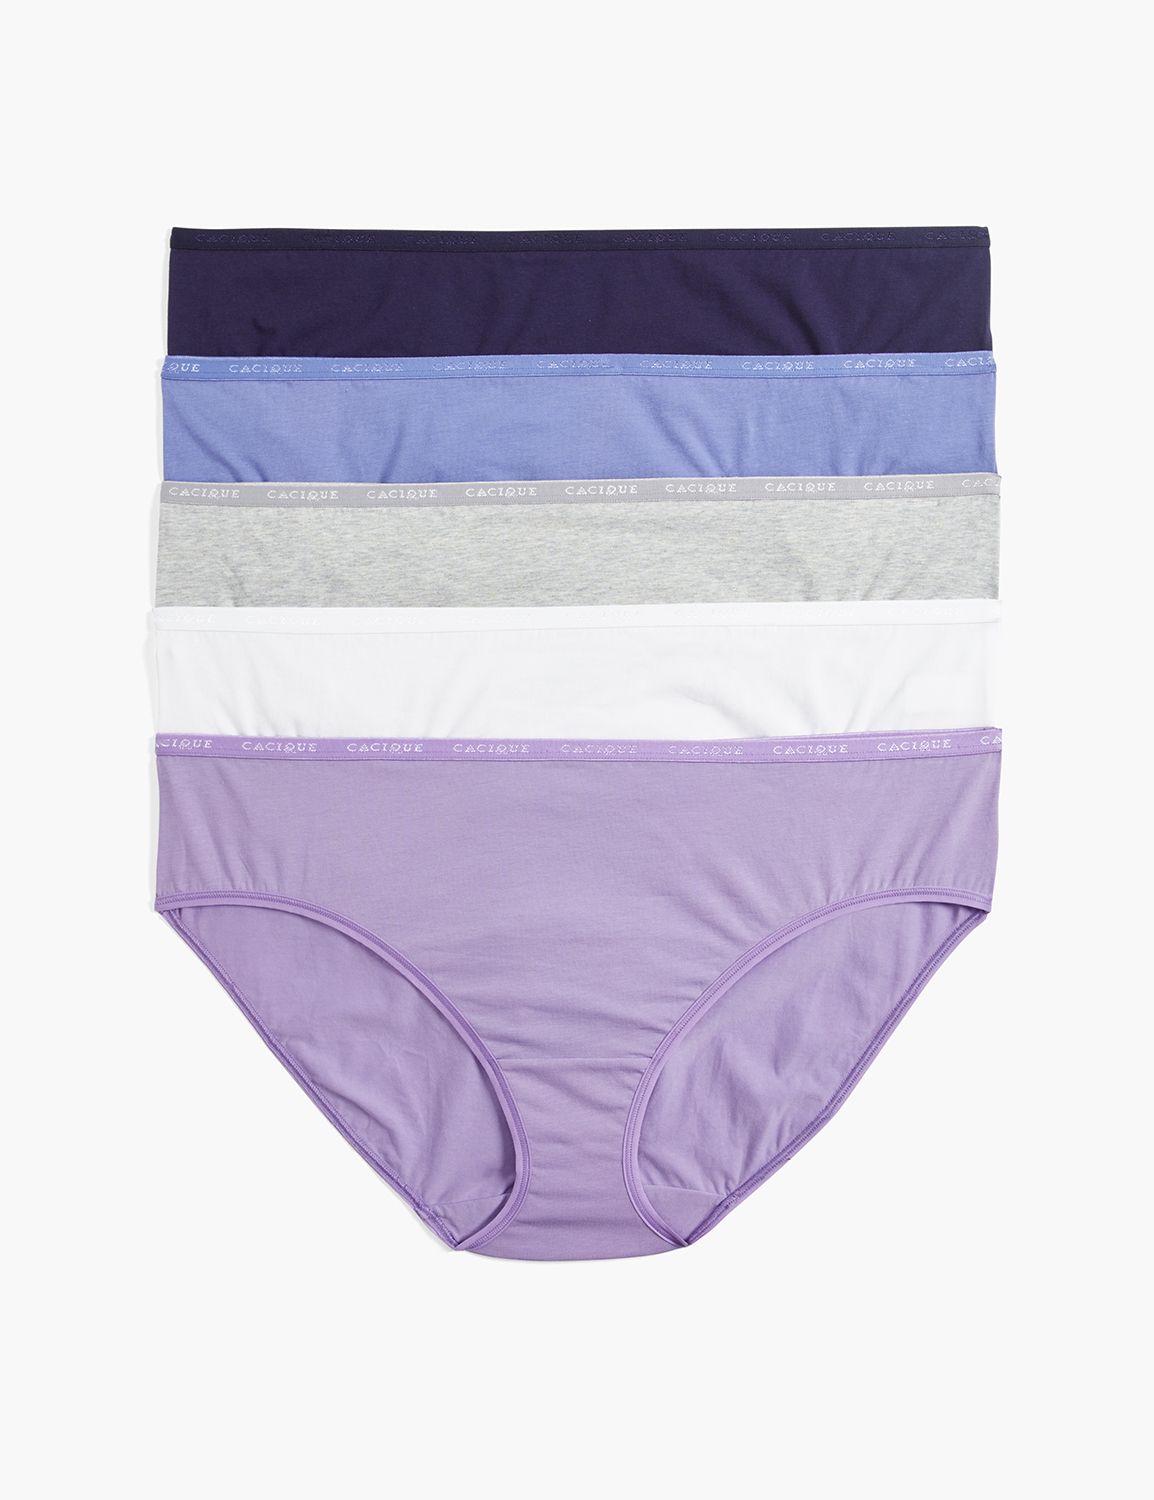 LOT OF LANE Bryant Cacique Women's Sassy Cotton String Bikini Panty  Underwear $8.50 - PicClick